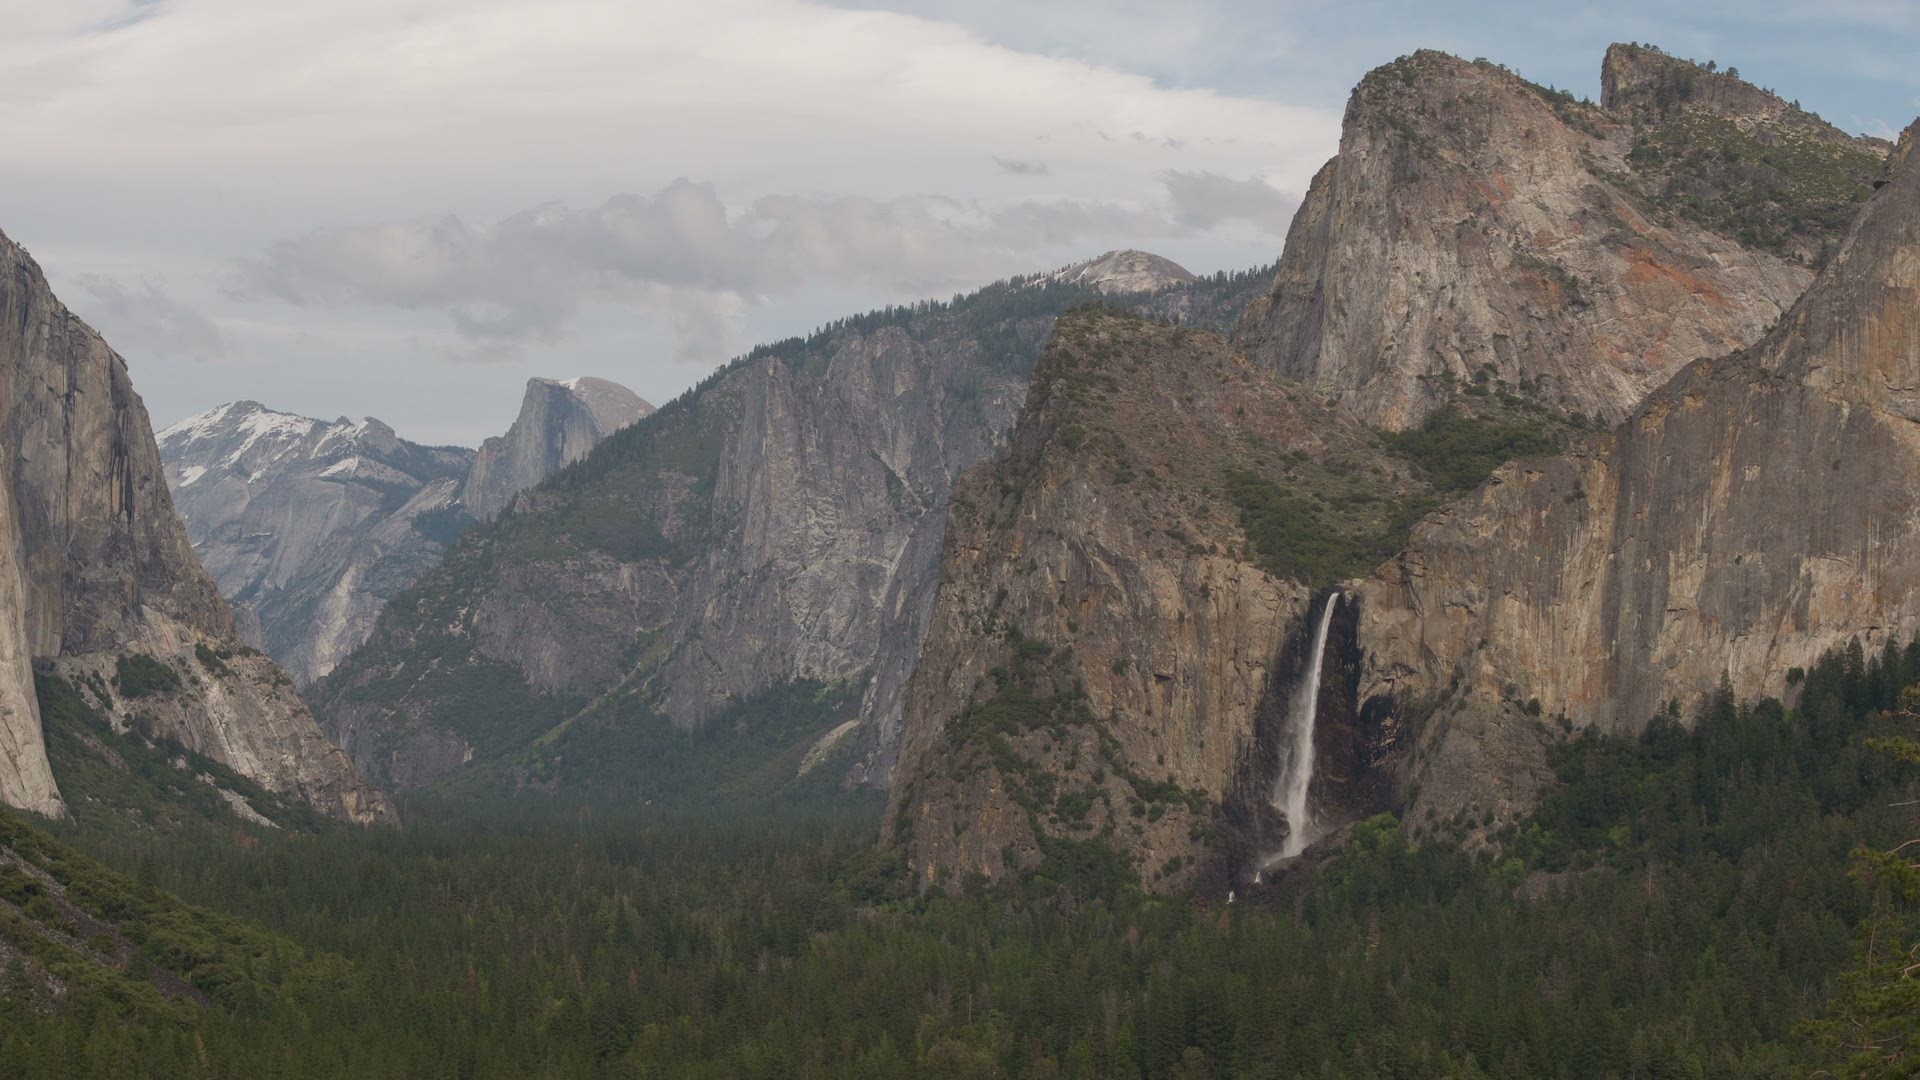 Take a few minutes to enjoy the beauty of Yosemite.